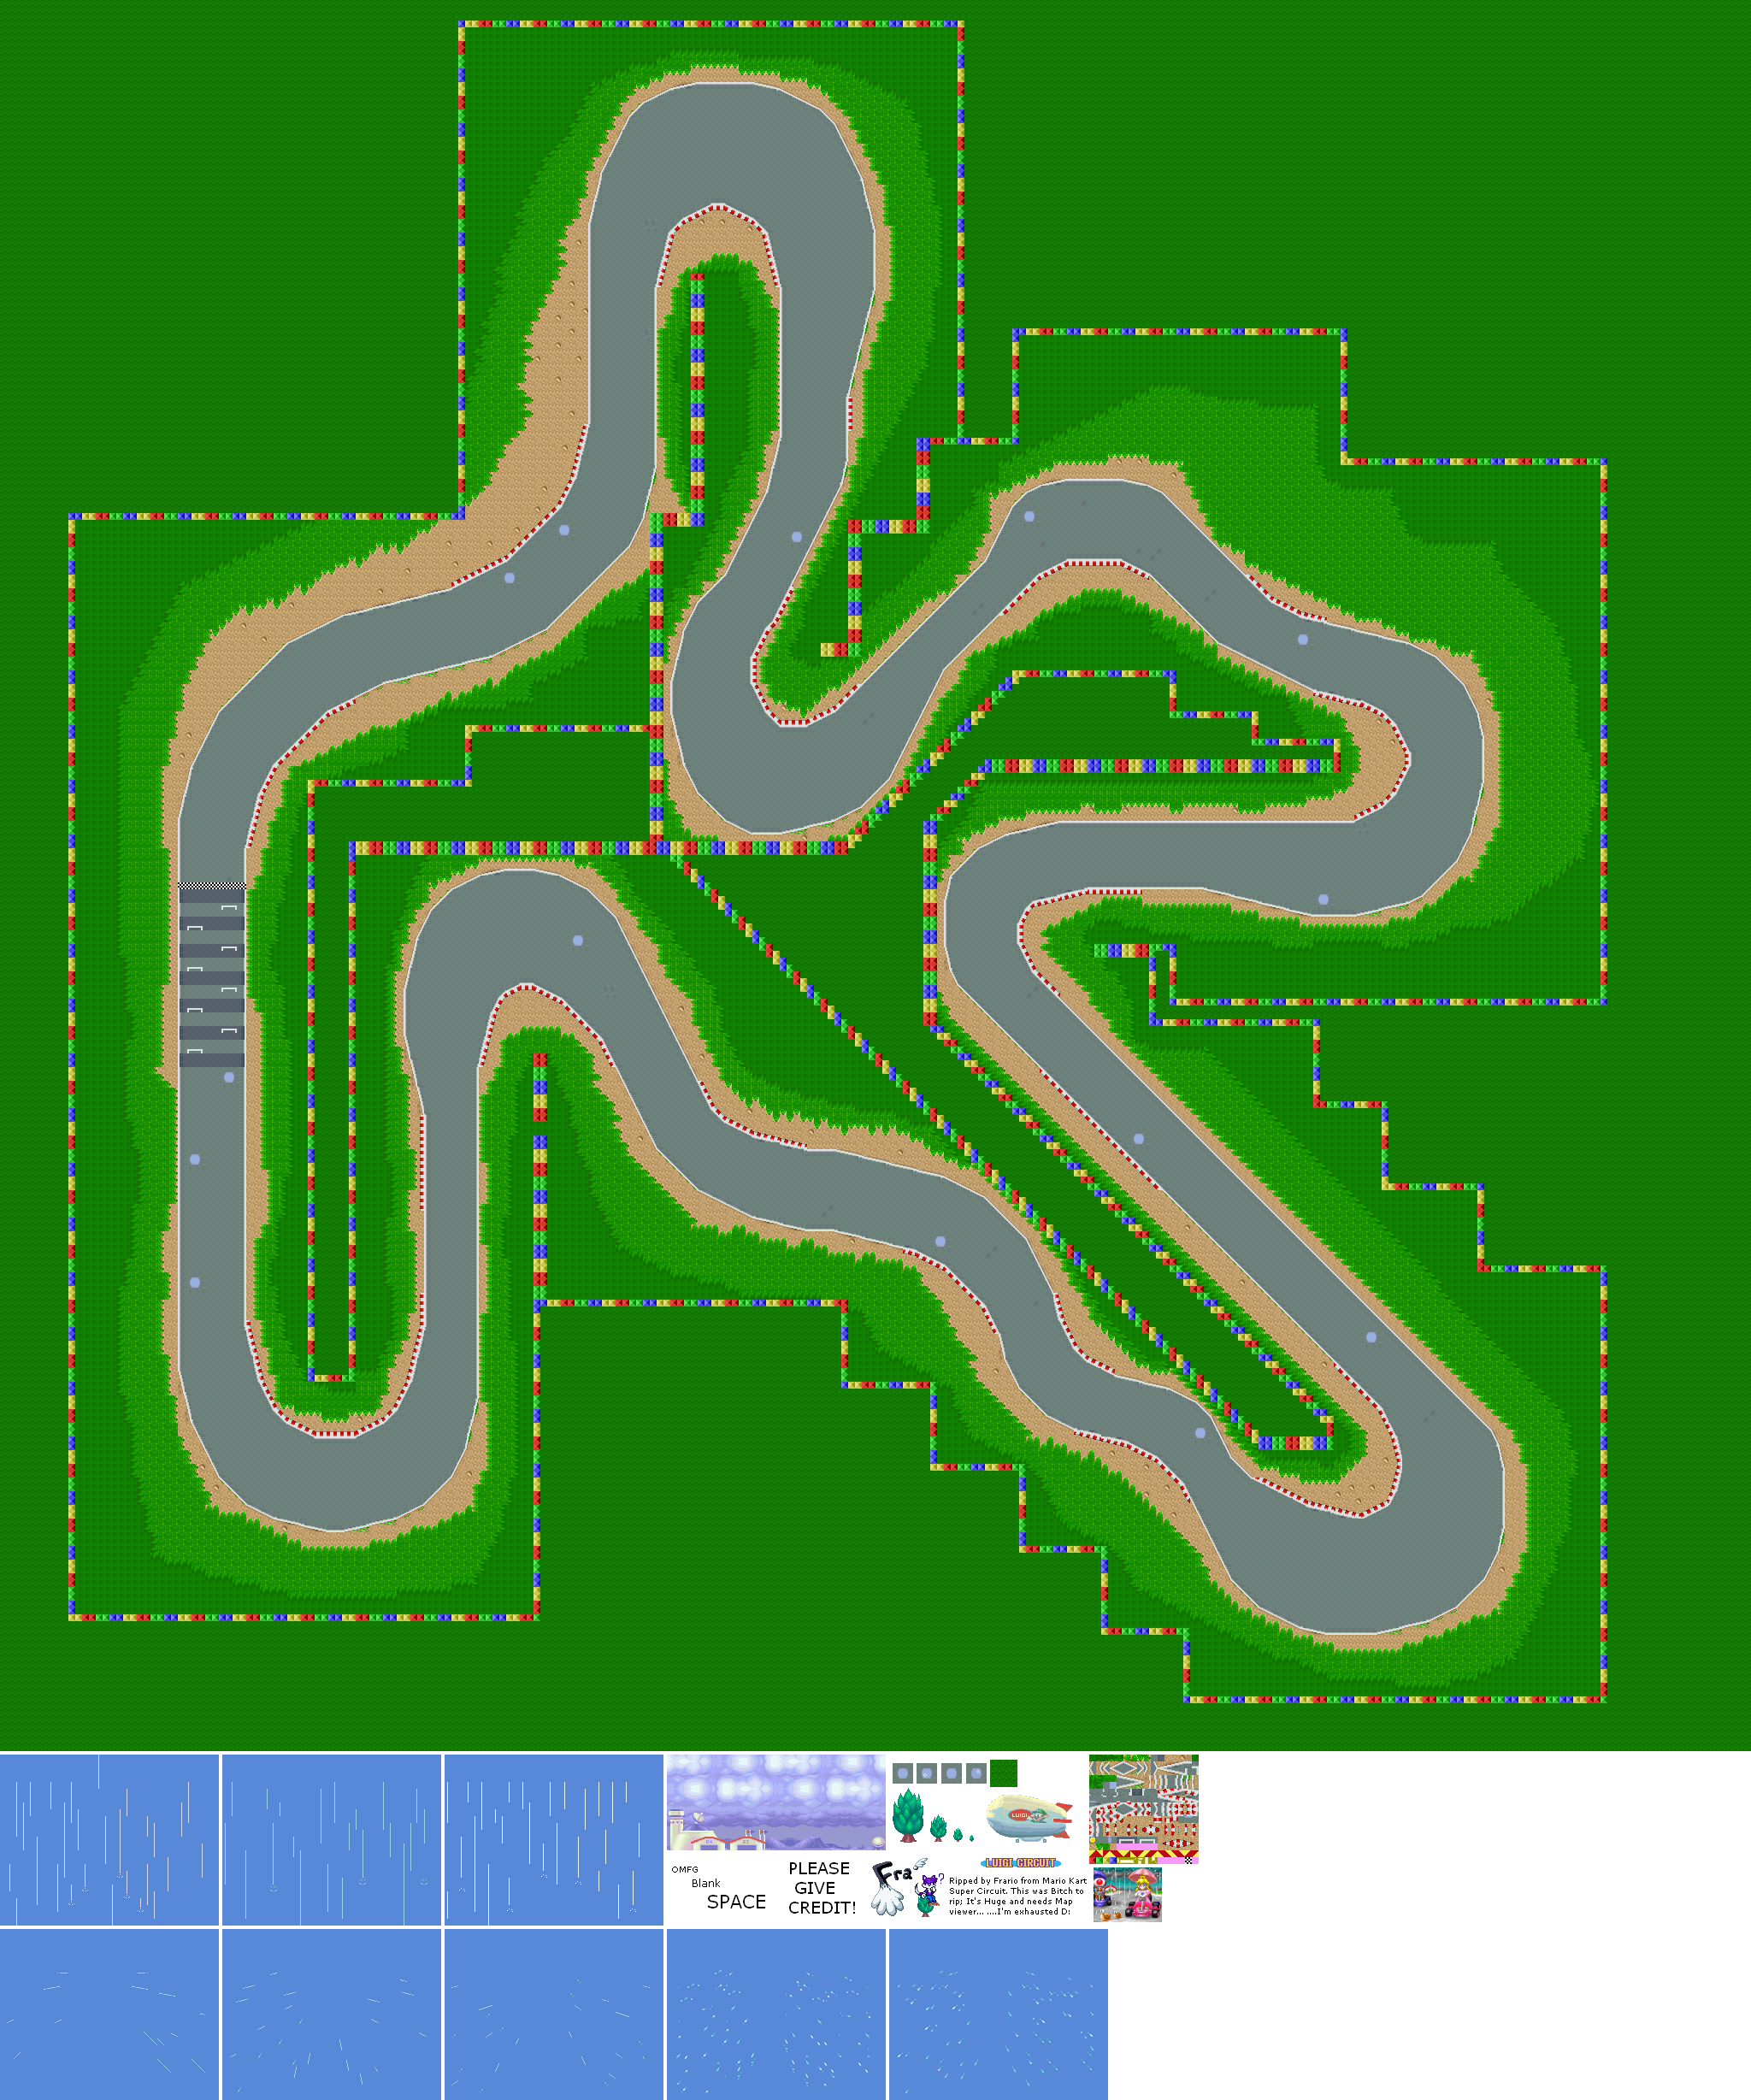 DS / DSi - Mario Kart DS - Mario Circuit - The Models Resource